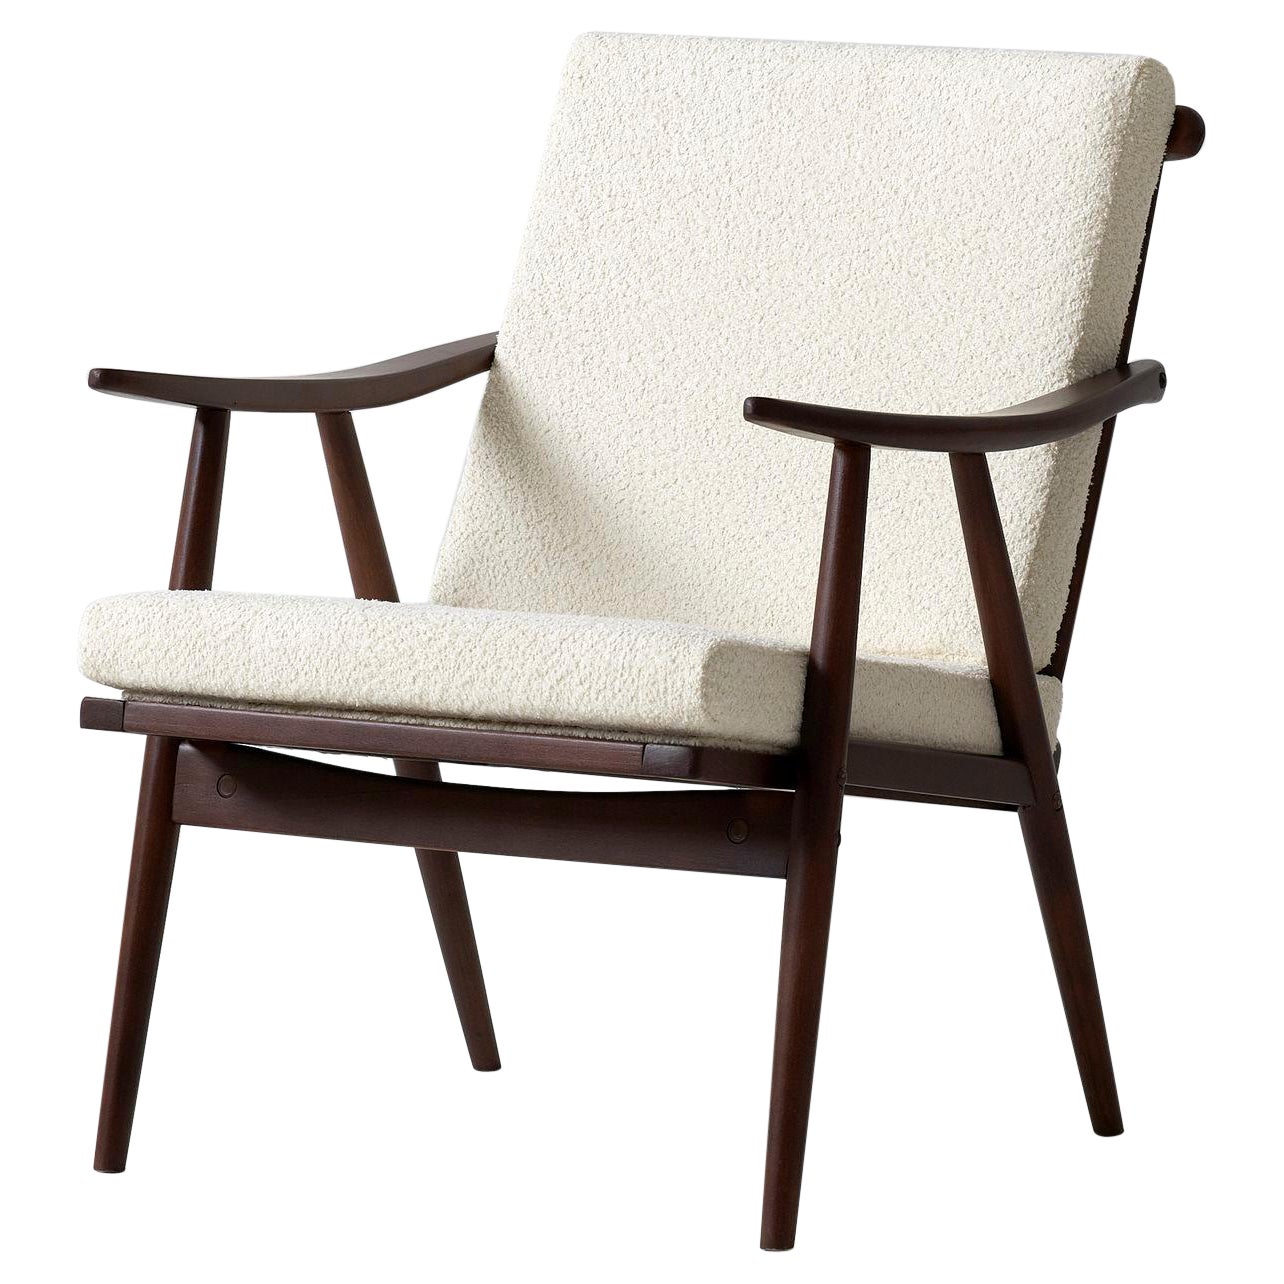 Boucle armchair, Boomerang model, 60's